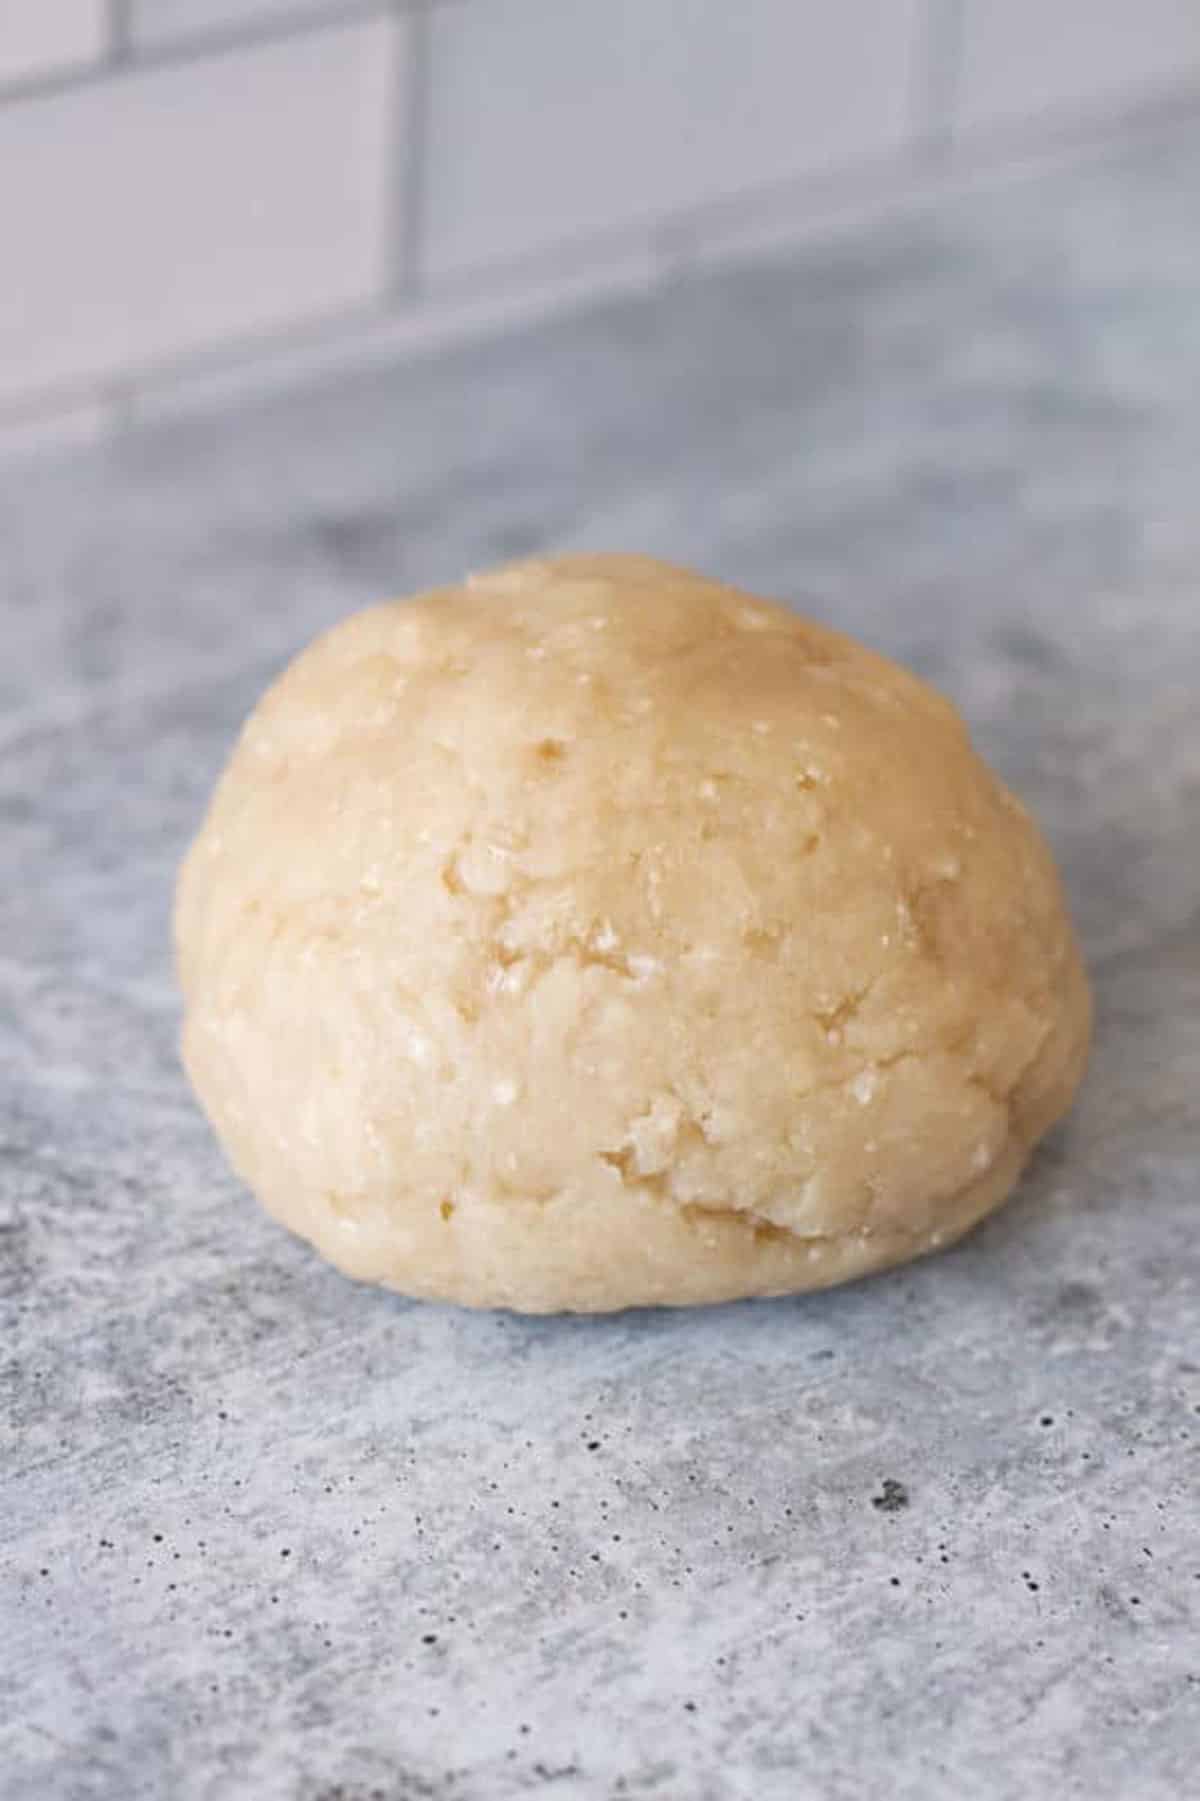 Churro dough in a ball sitting on a countertop.